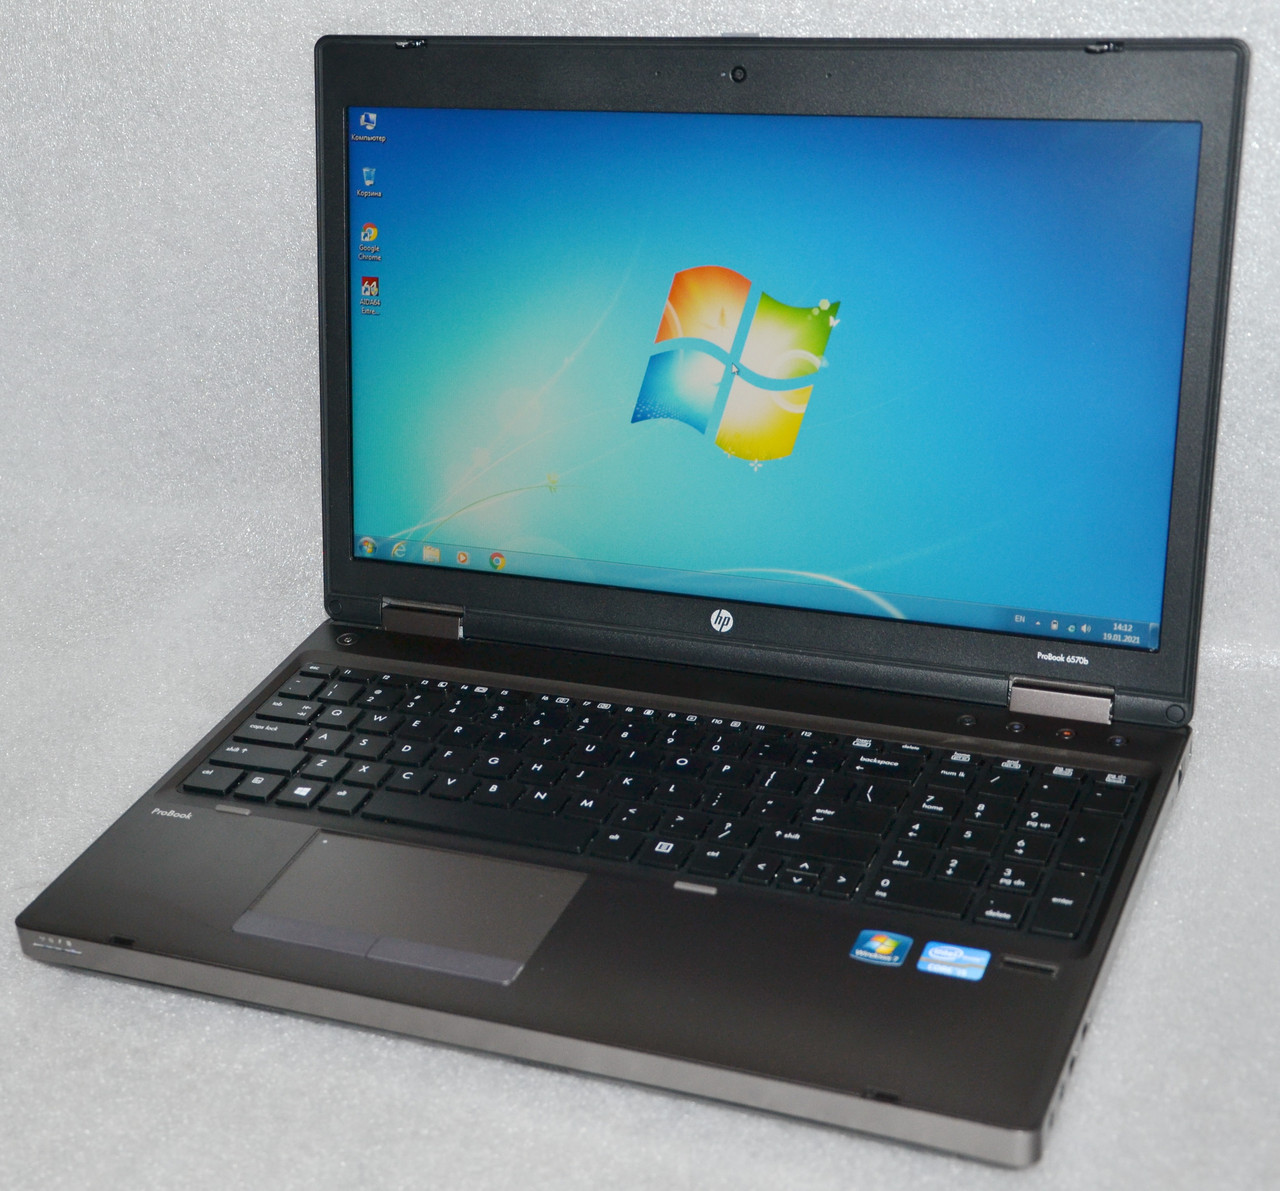 Ноутбук HP ProBook 6570b i5-3360m 2.8GHz 4Gb/320Gb 15.6"